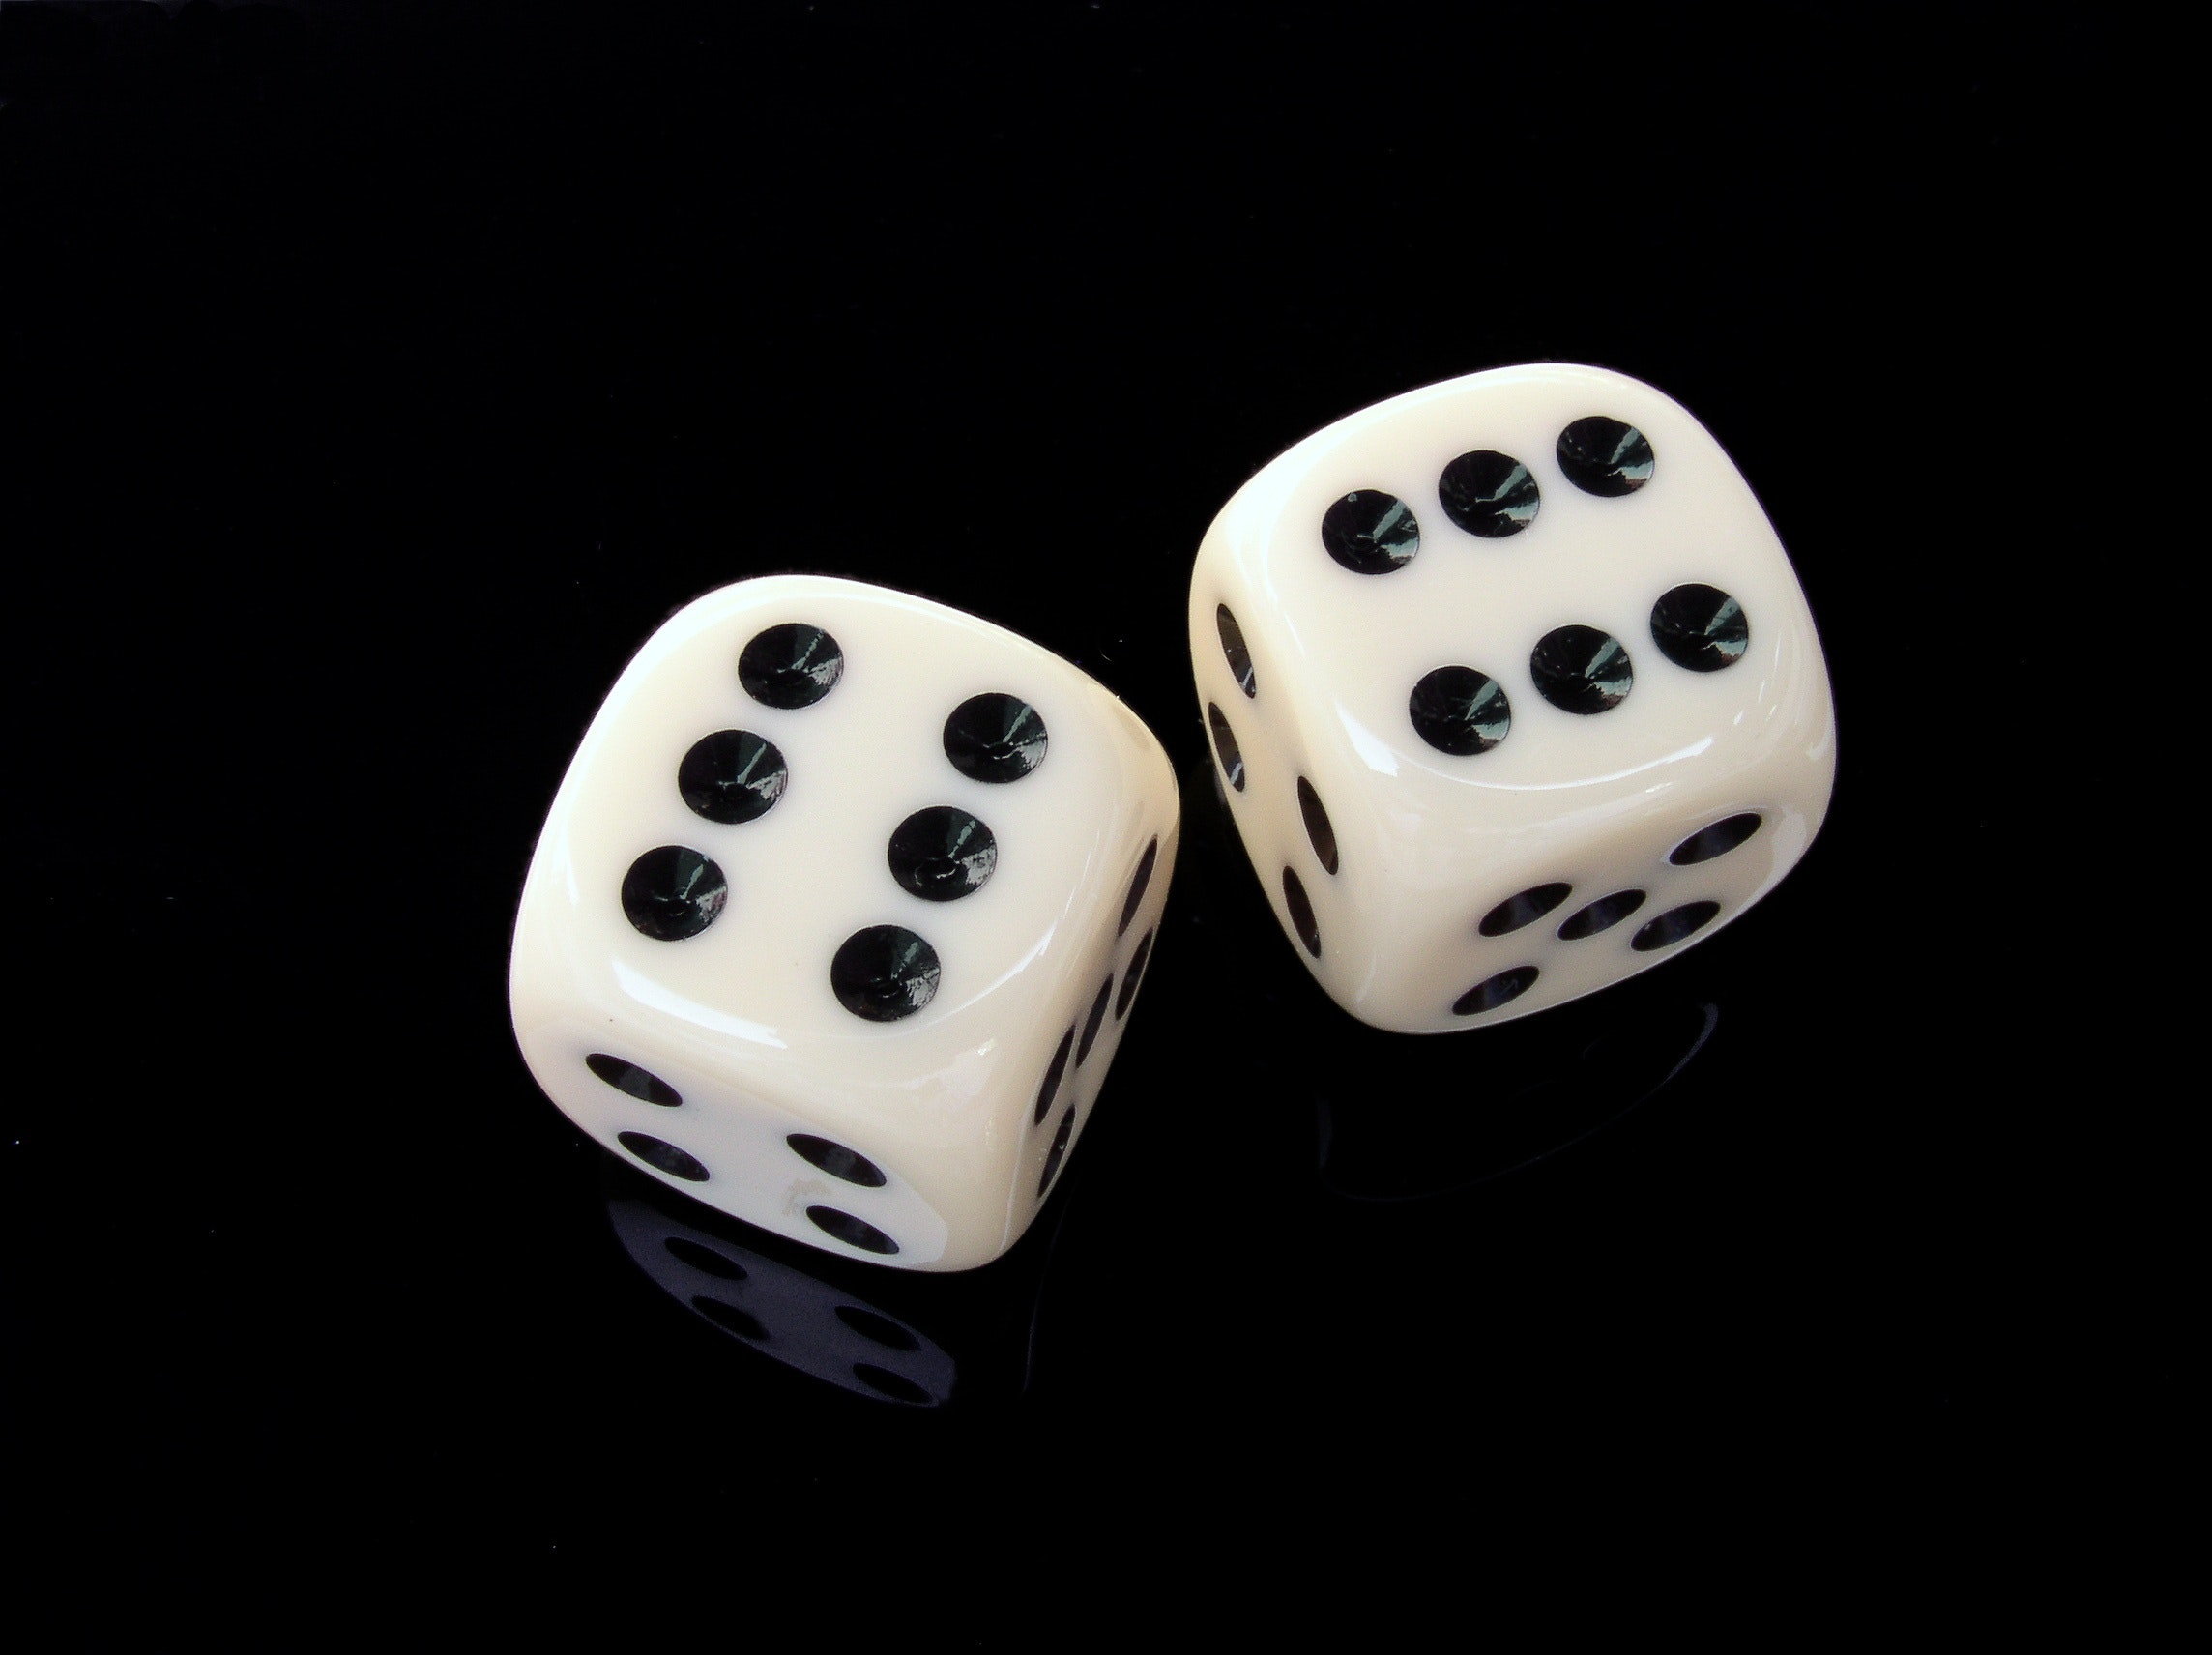 White and black dice photo